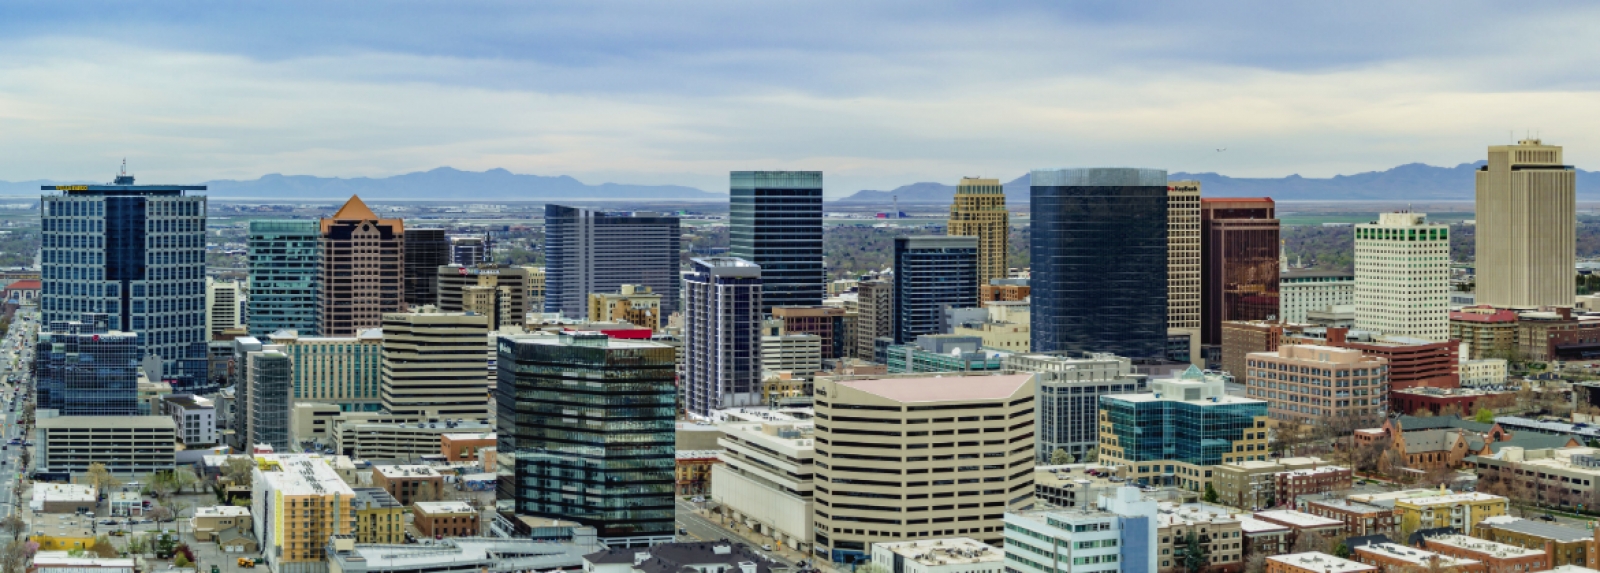 Downtown Alliance Salt Lake City, Utah Growth on the Horizon